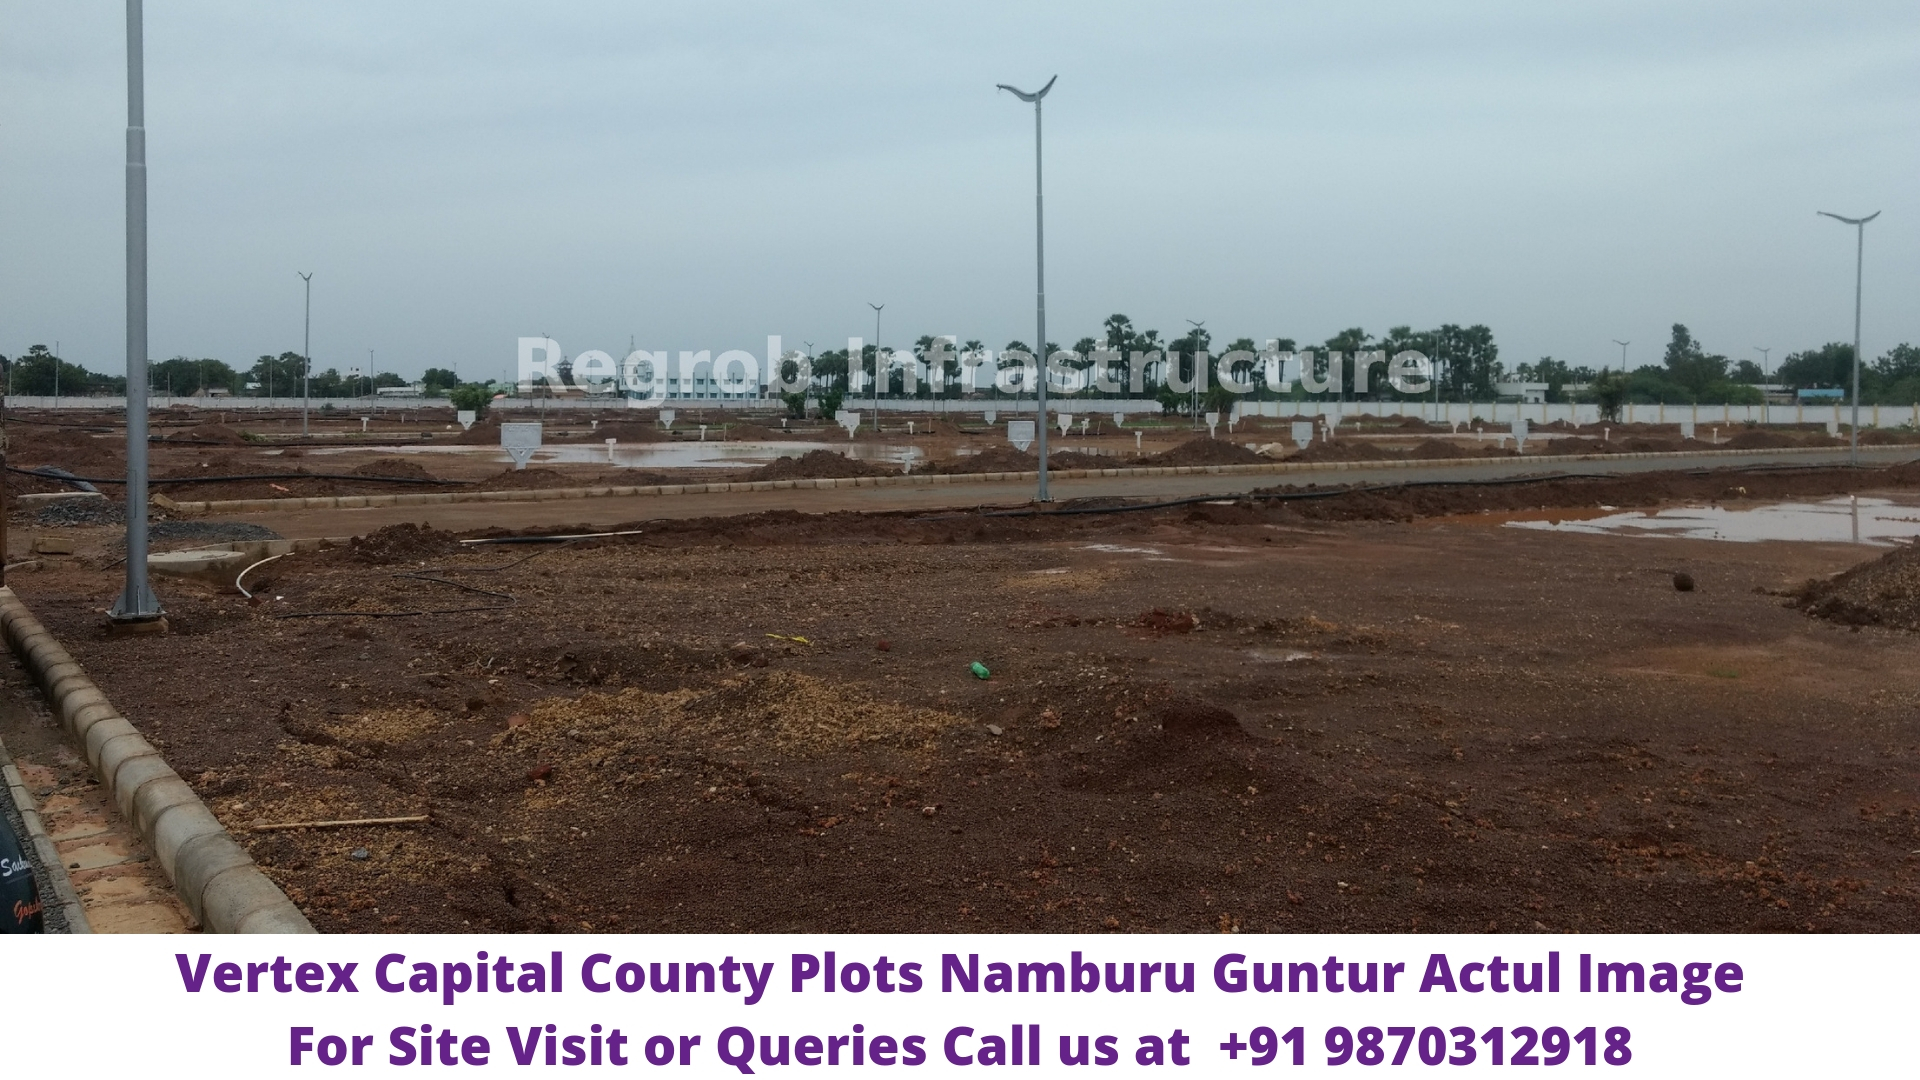 Vertex Capital County Plots Namburu Guntur